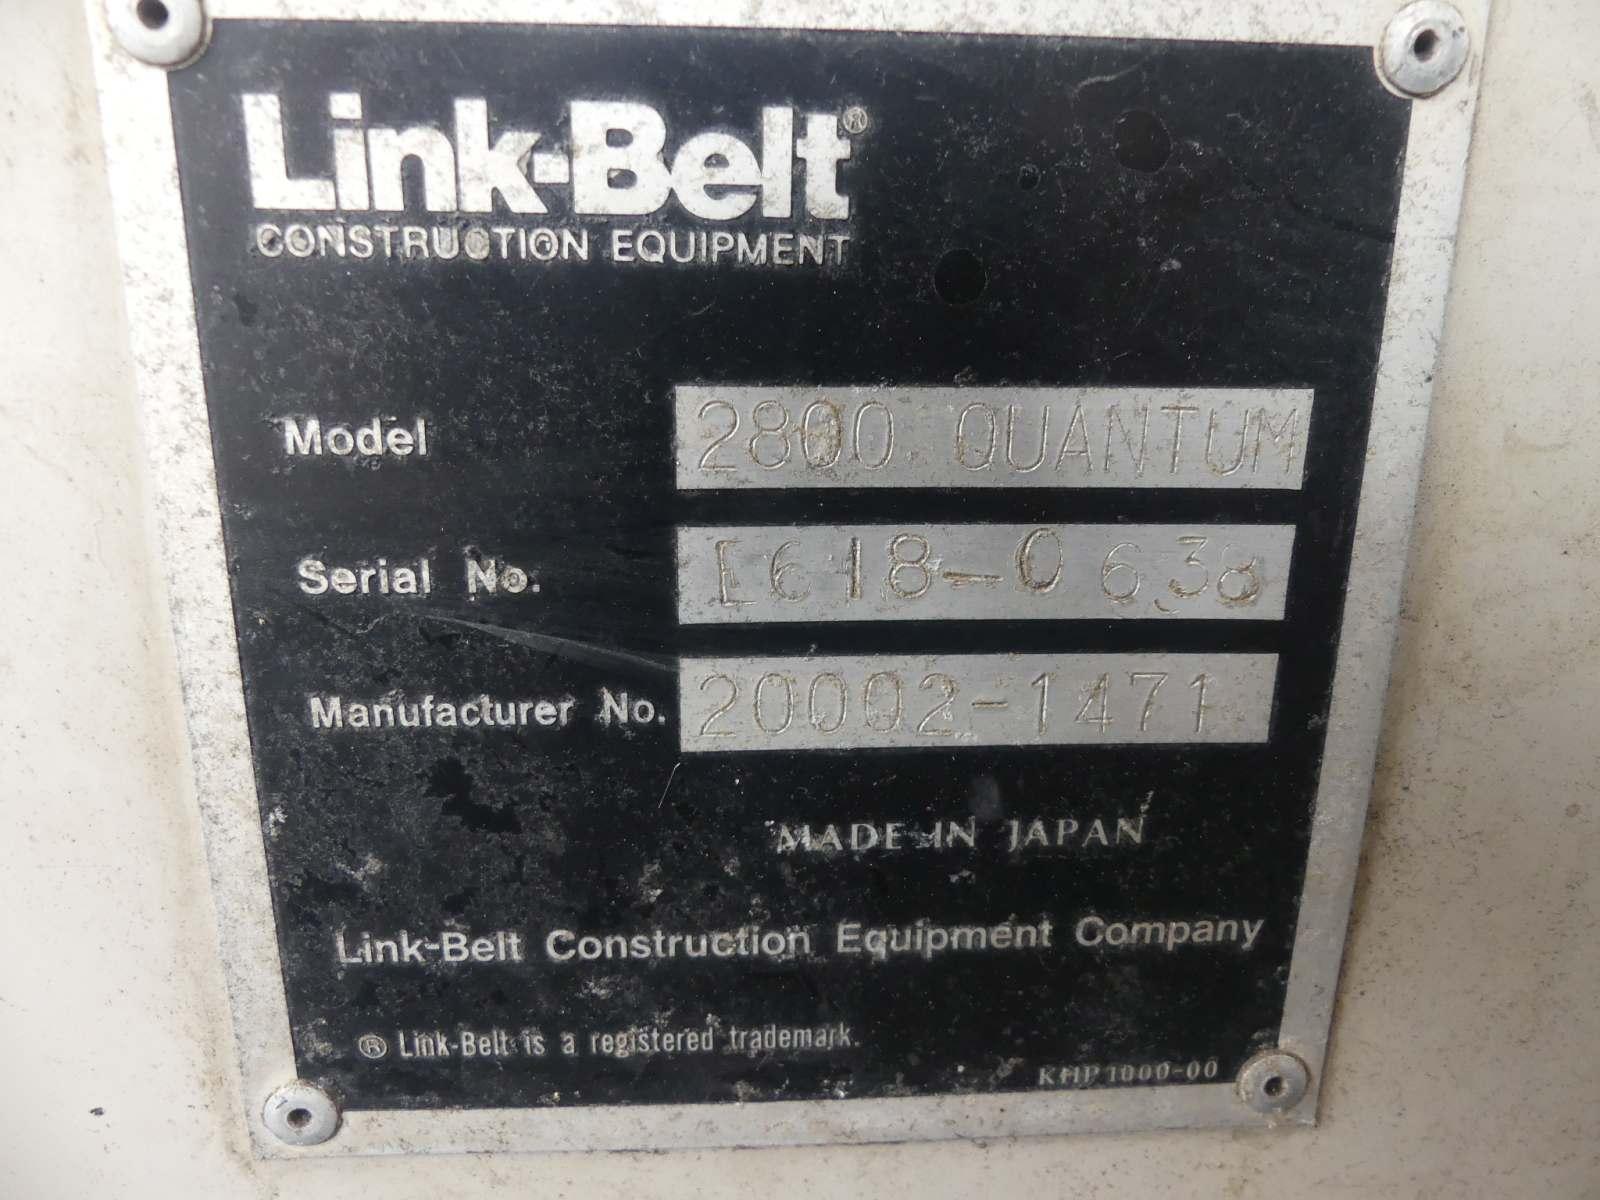 1998 Linkbelt 2800 Quantam Excavator, s/n E6I8-0638: Encl. Cab, Meter Shows